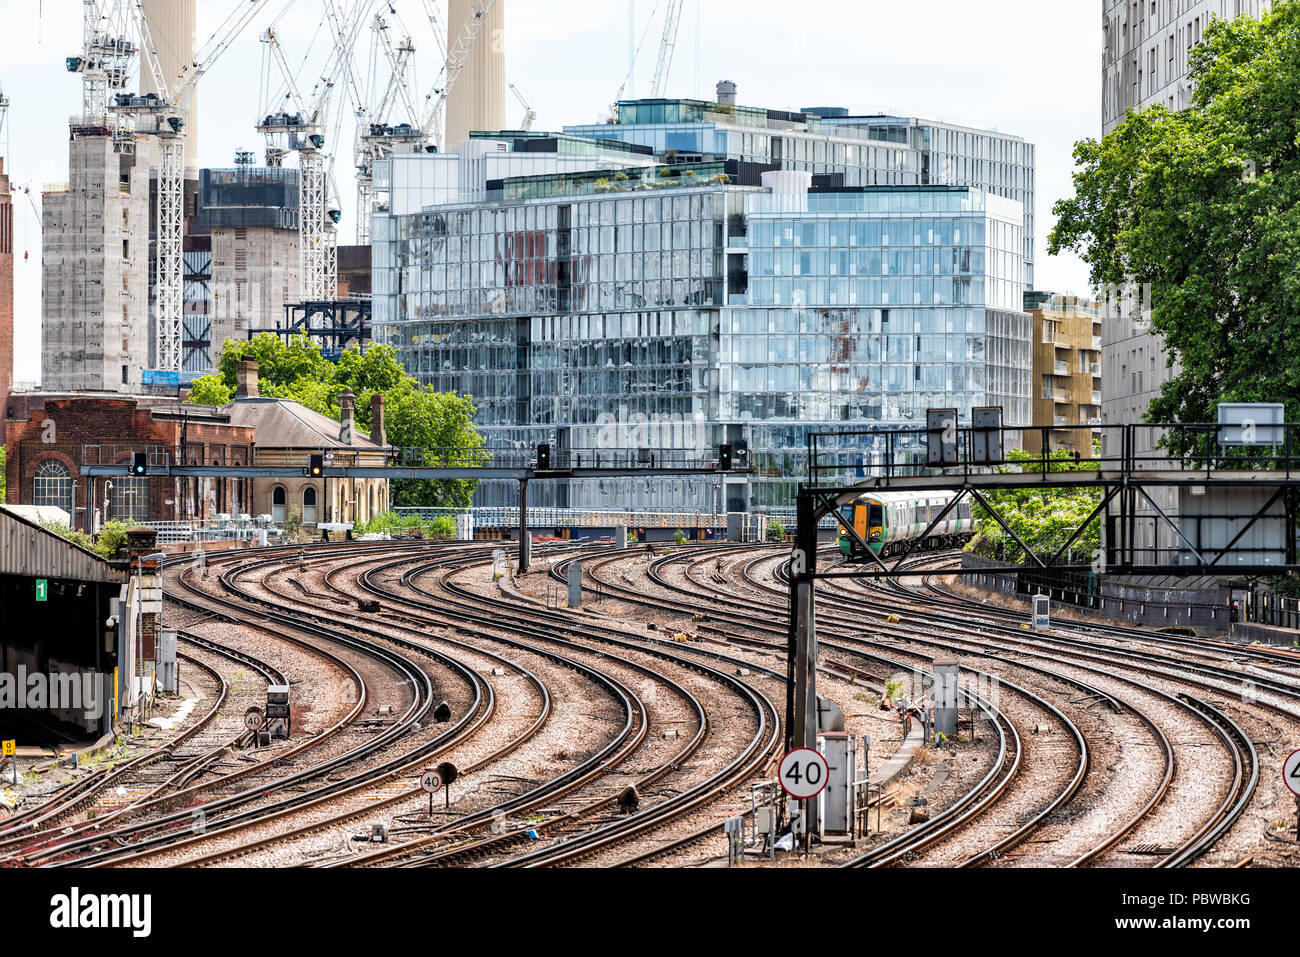 London, UK - June 23, 2018: Industrial railroad tracks in United Kingdom, Pimlico neighborhood district, Abbots Manor to Victoria station transportati Stock Photo